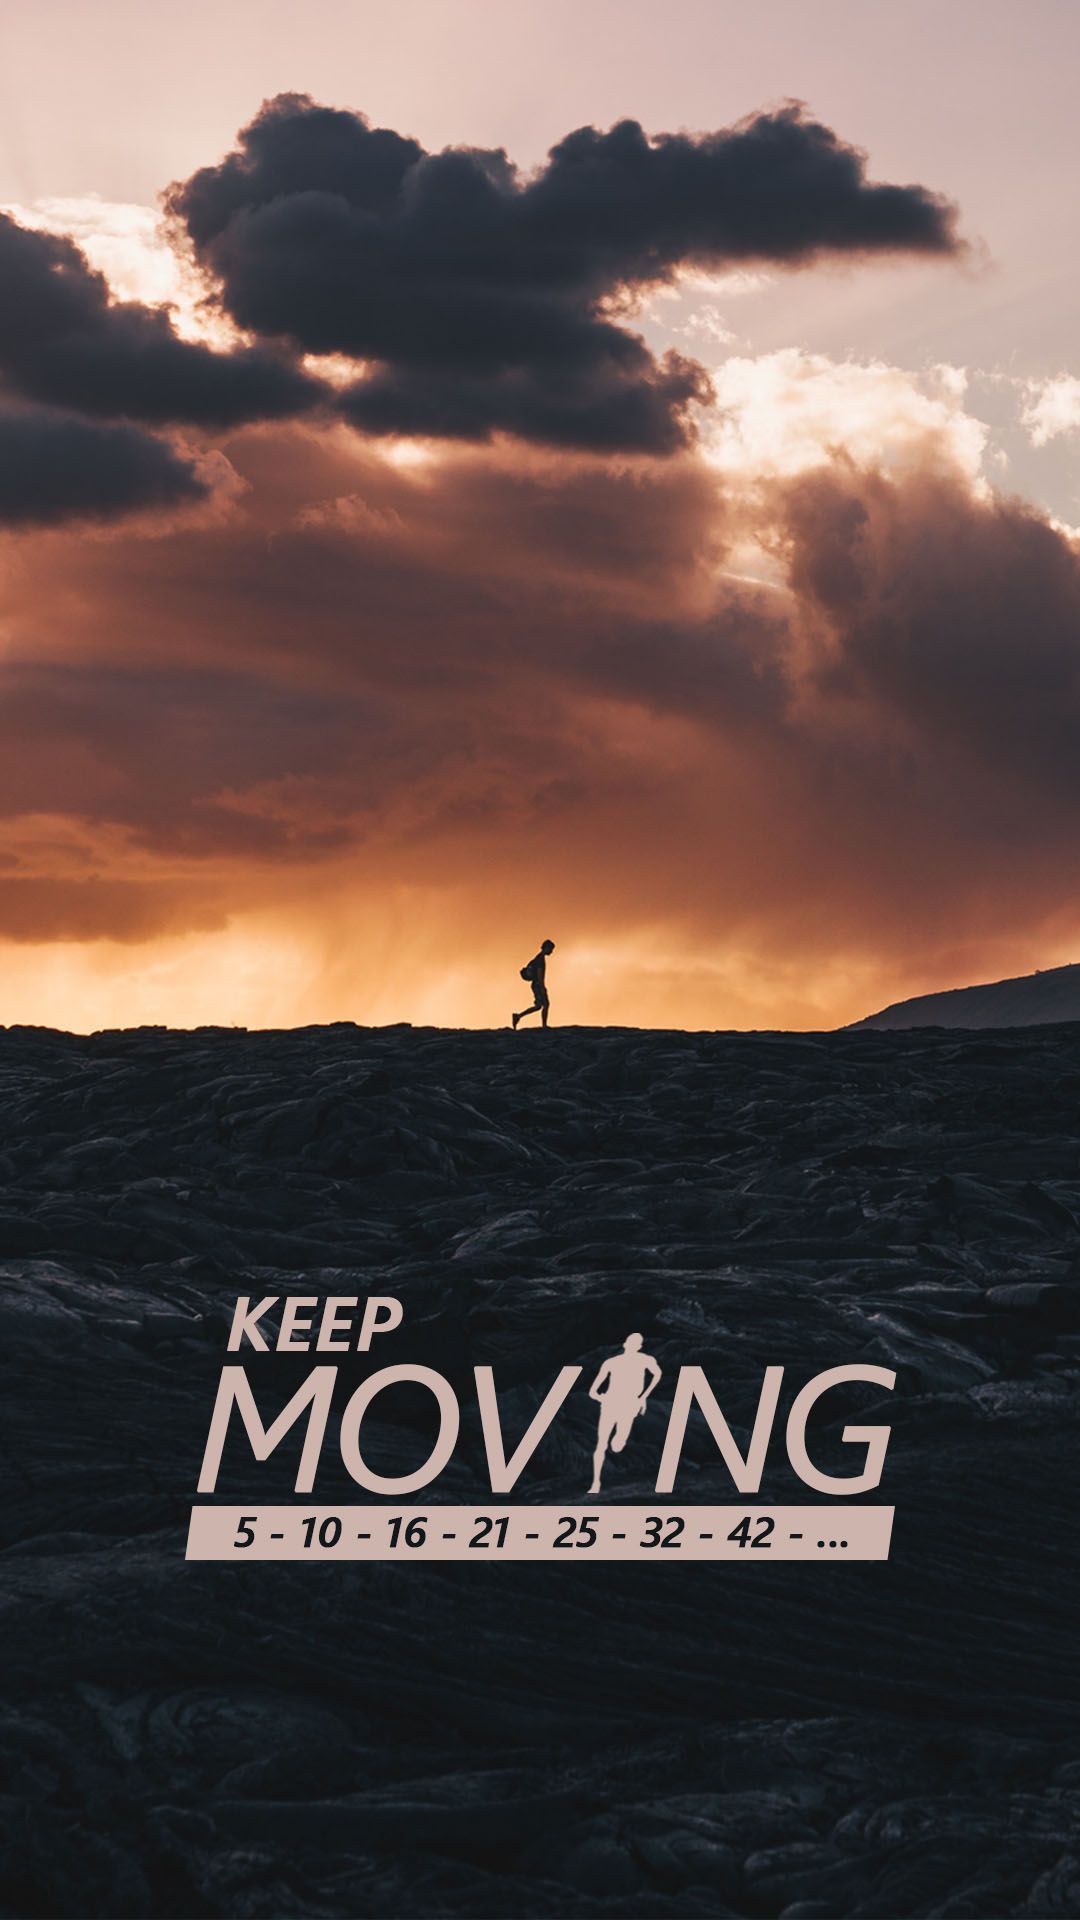 Keep Moving. iPhone wallpaper, New car wallpaper, Wallpaper